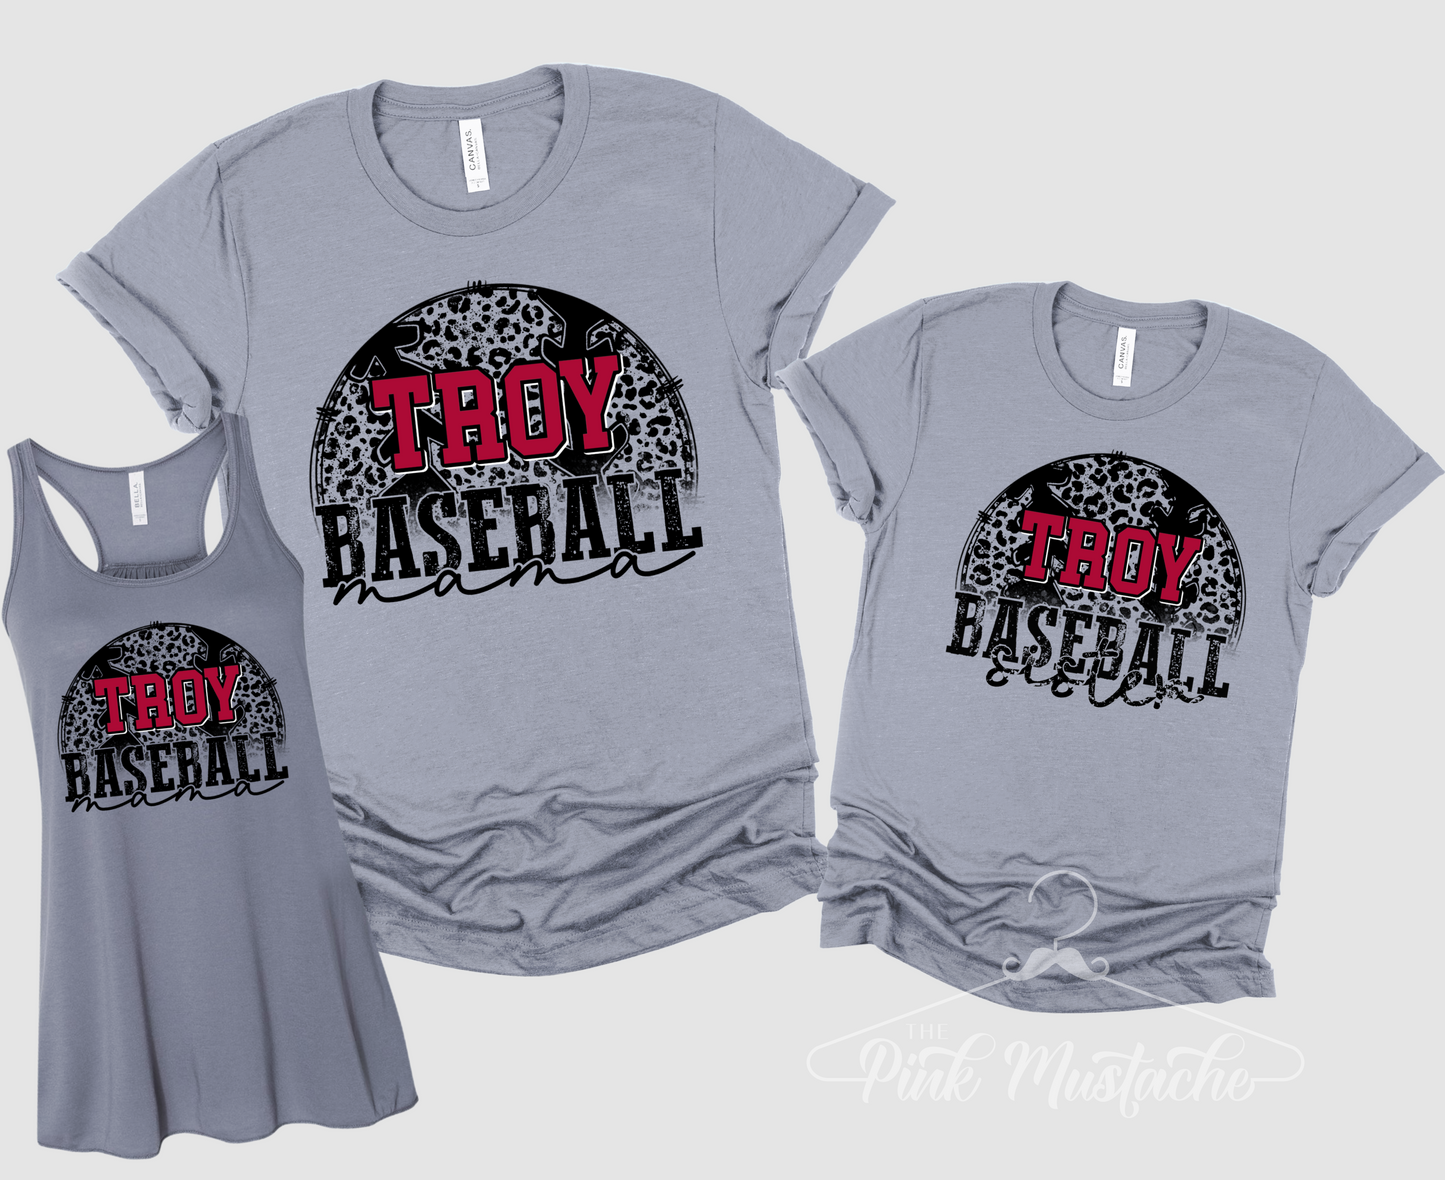 Troy Baseball All Star Trojans Soft Style Tee or Tank/ Troy Baseball Little League Shirts